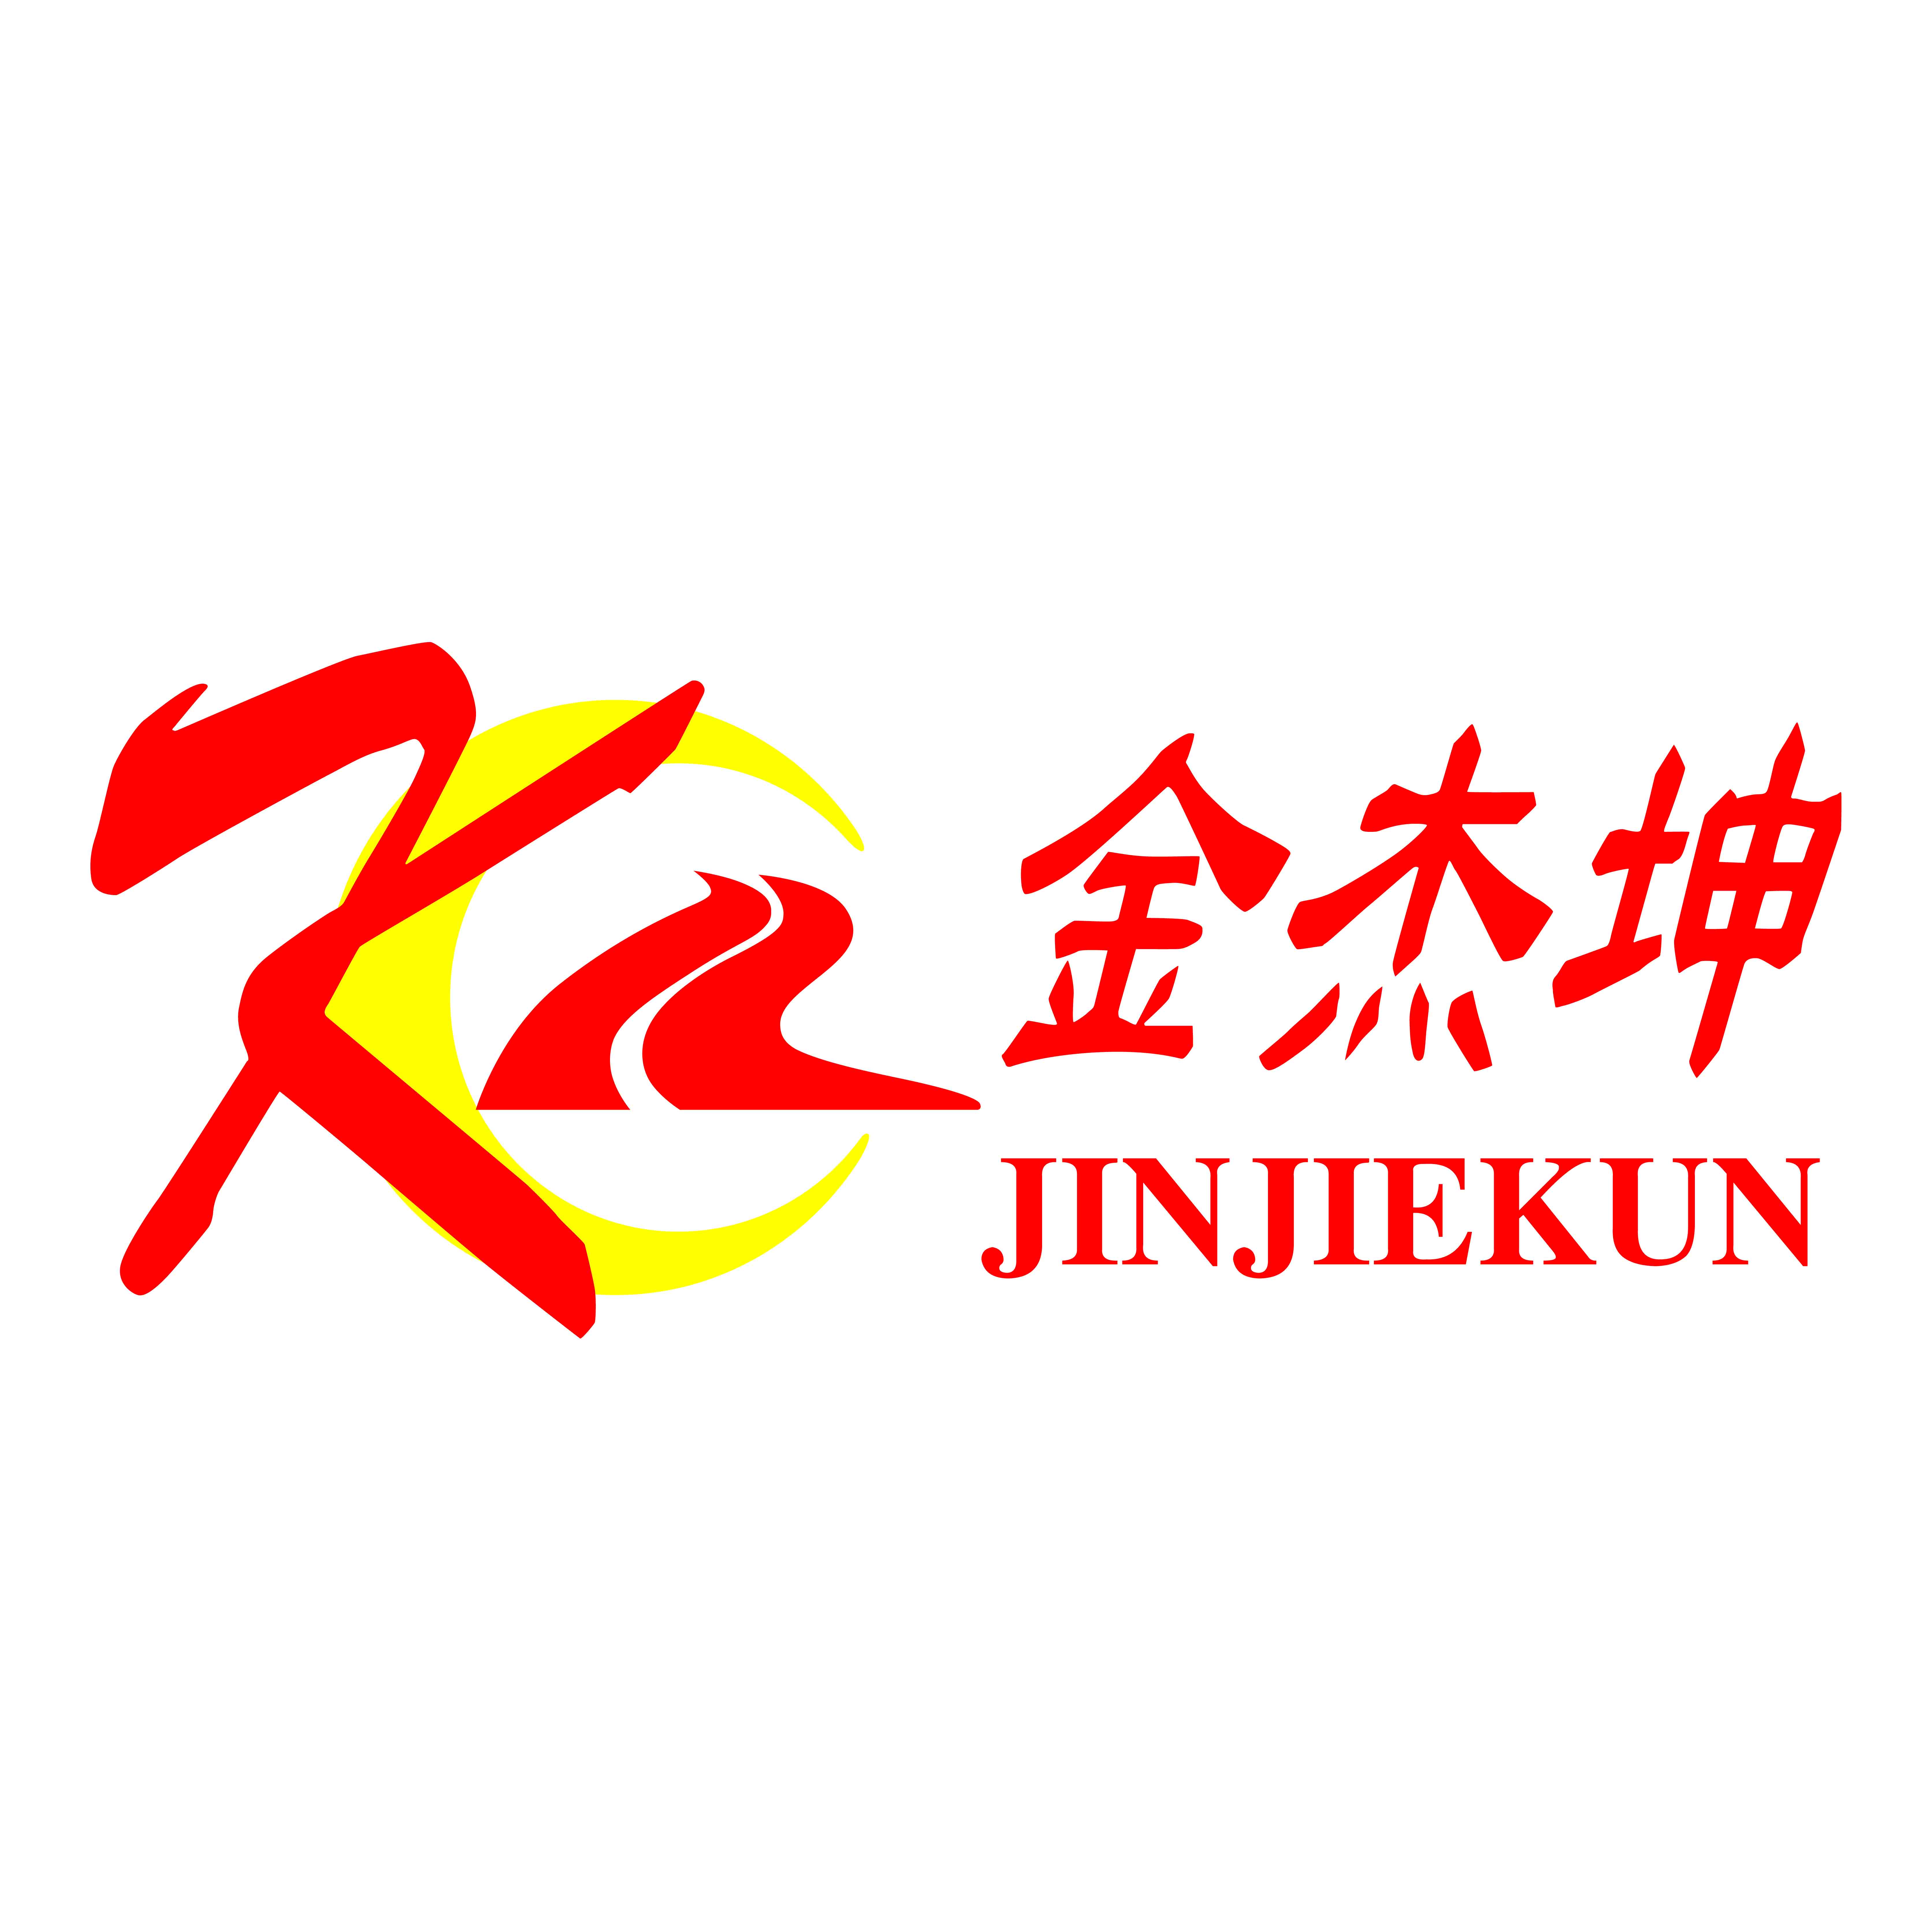 Indústria Co. de Xiamen Jinjiekun, Ltd.